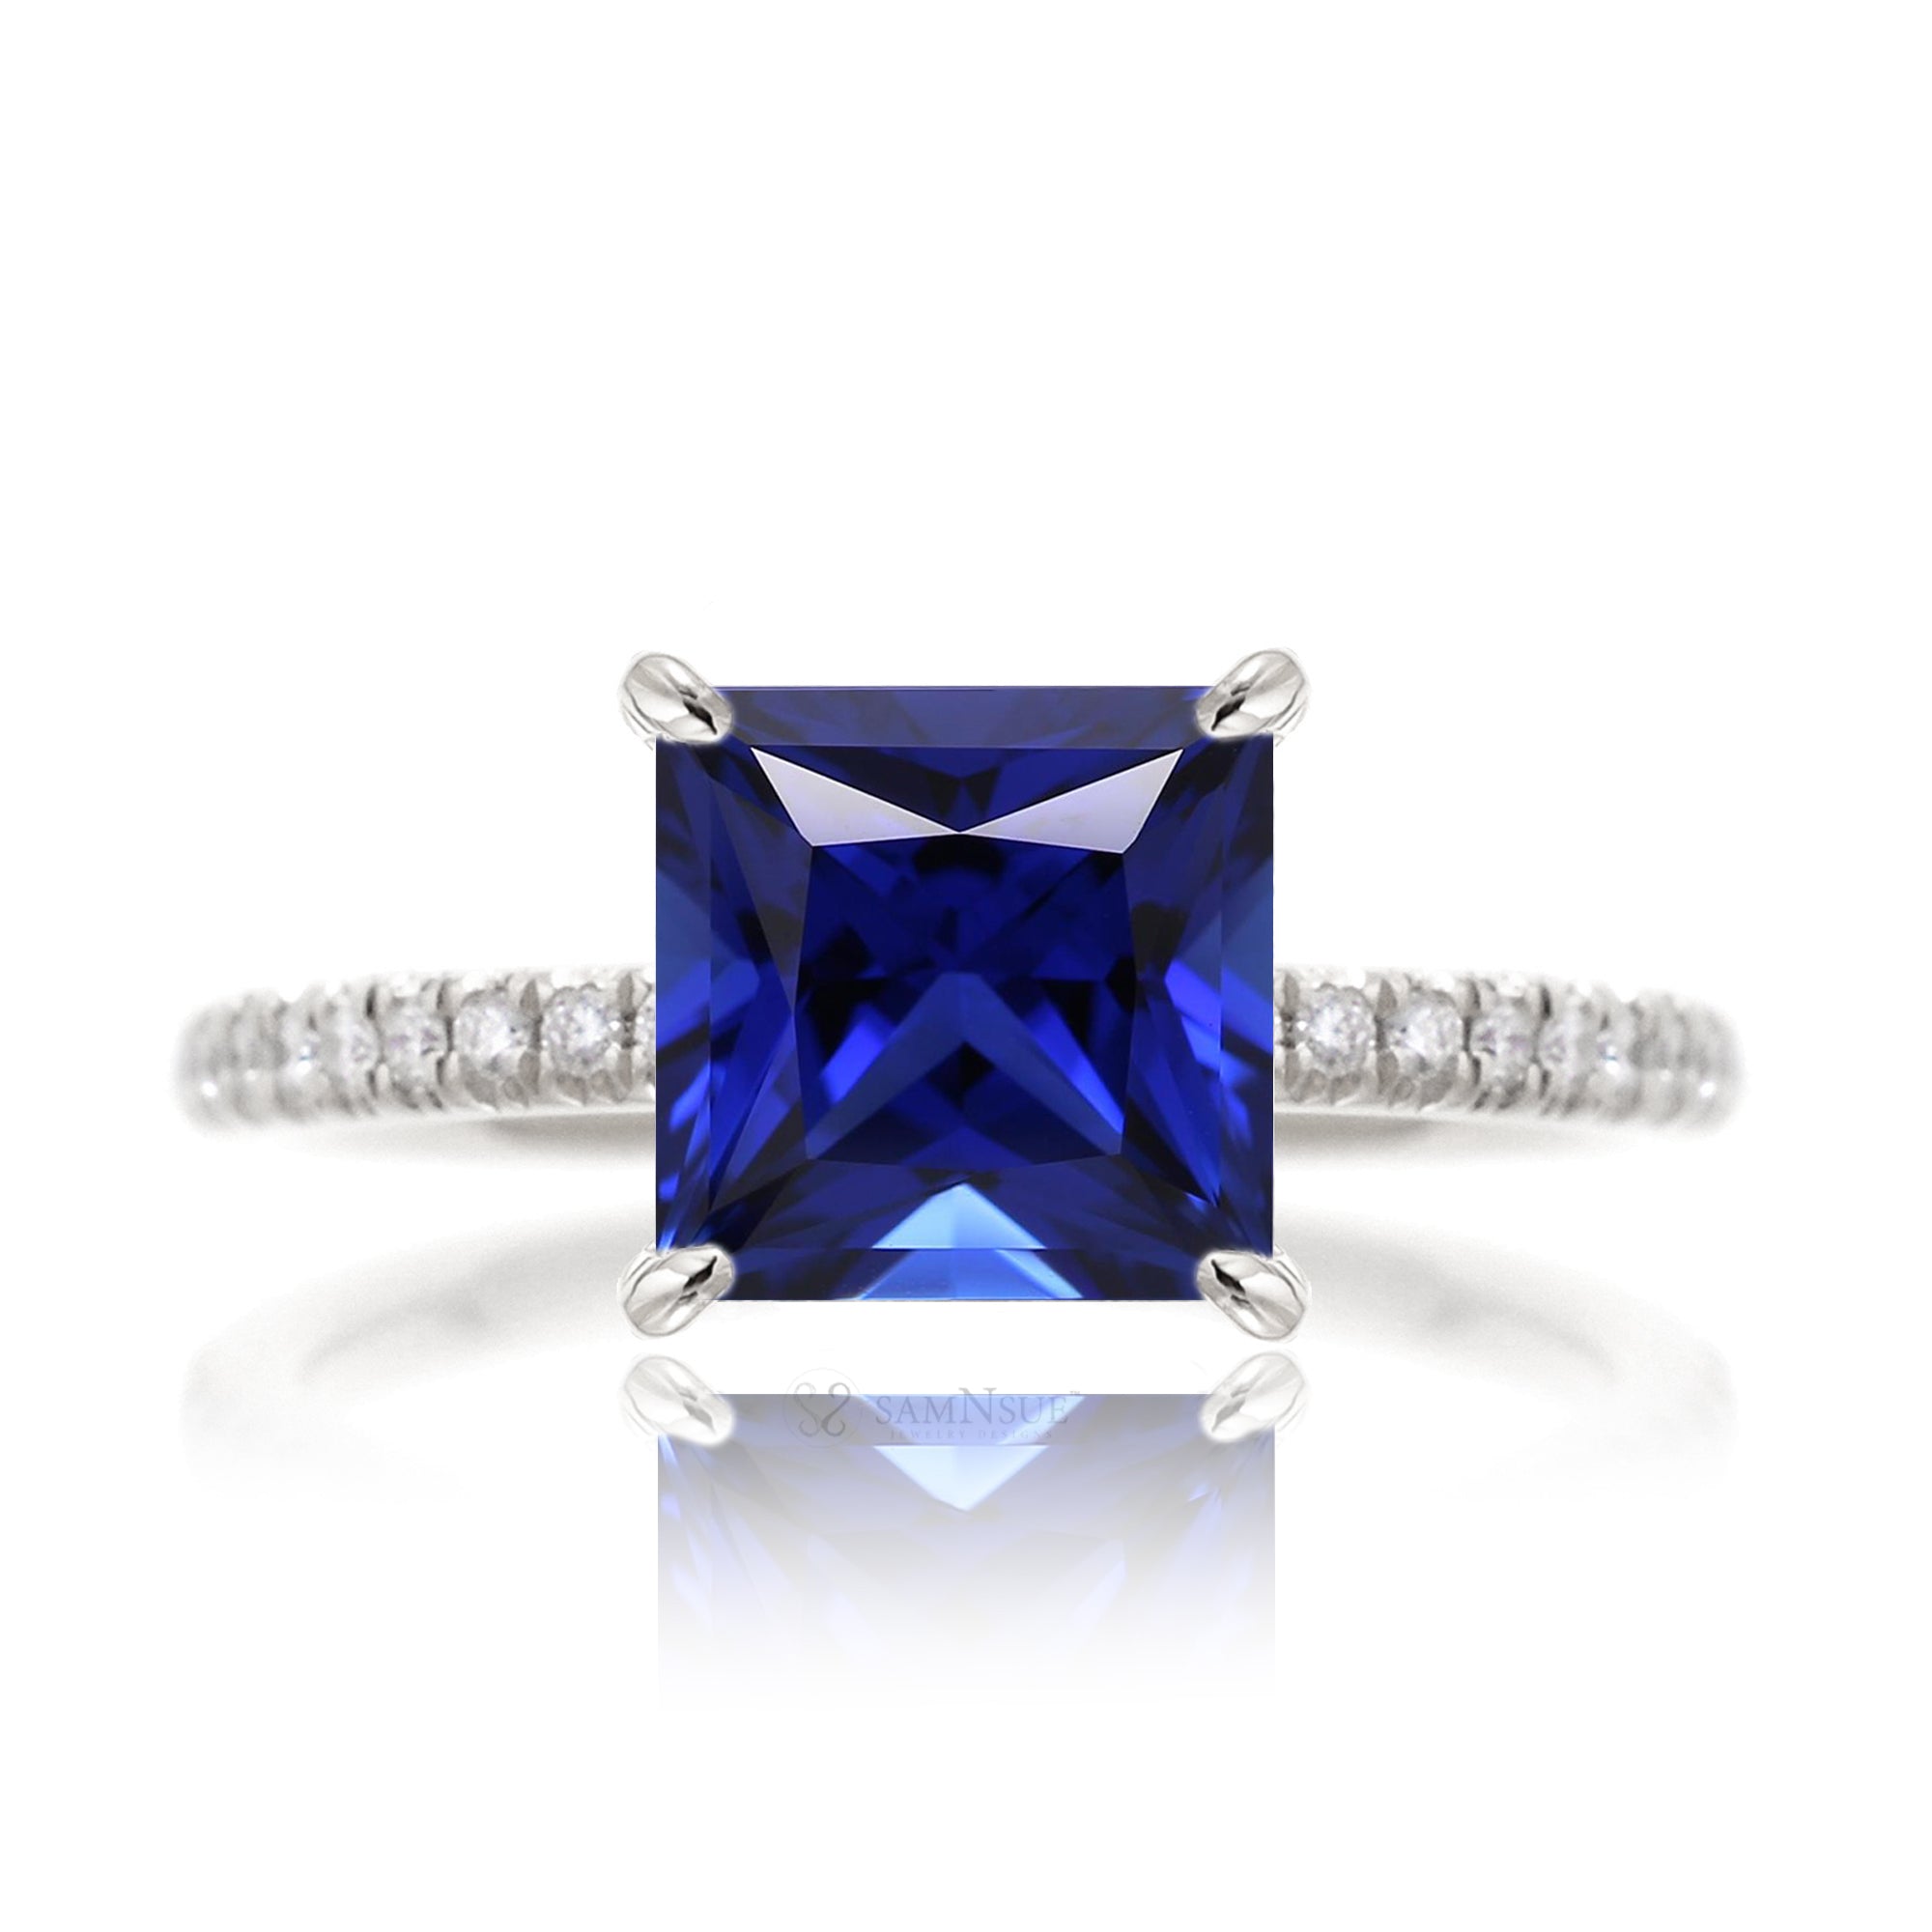 Princess cut blue sapphire diamond engagement ring white gold - the Ava